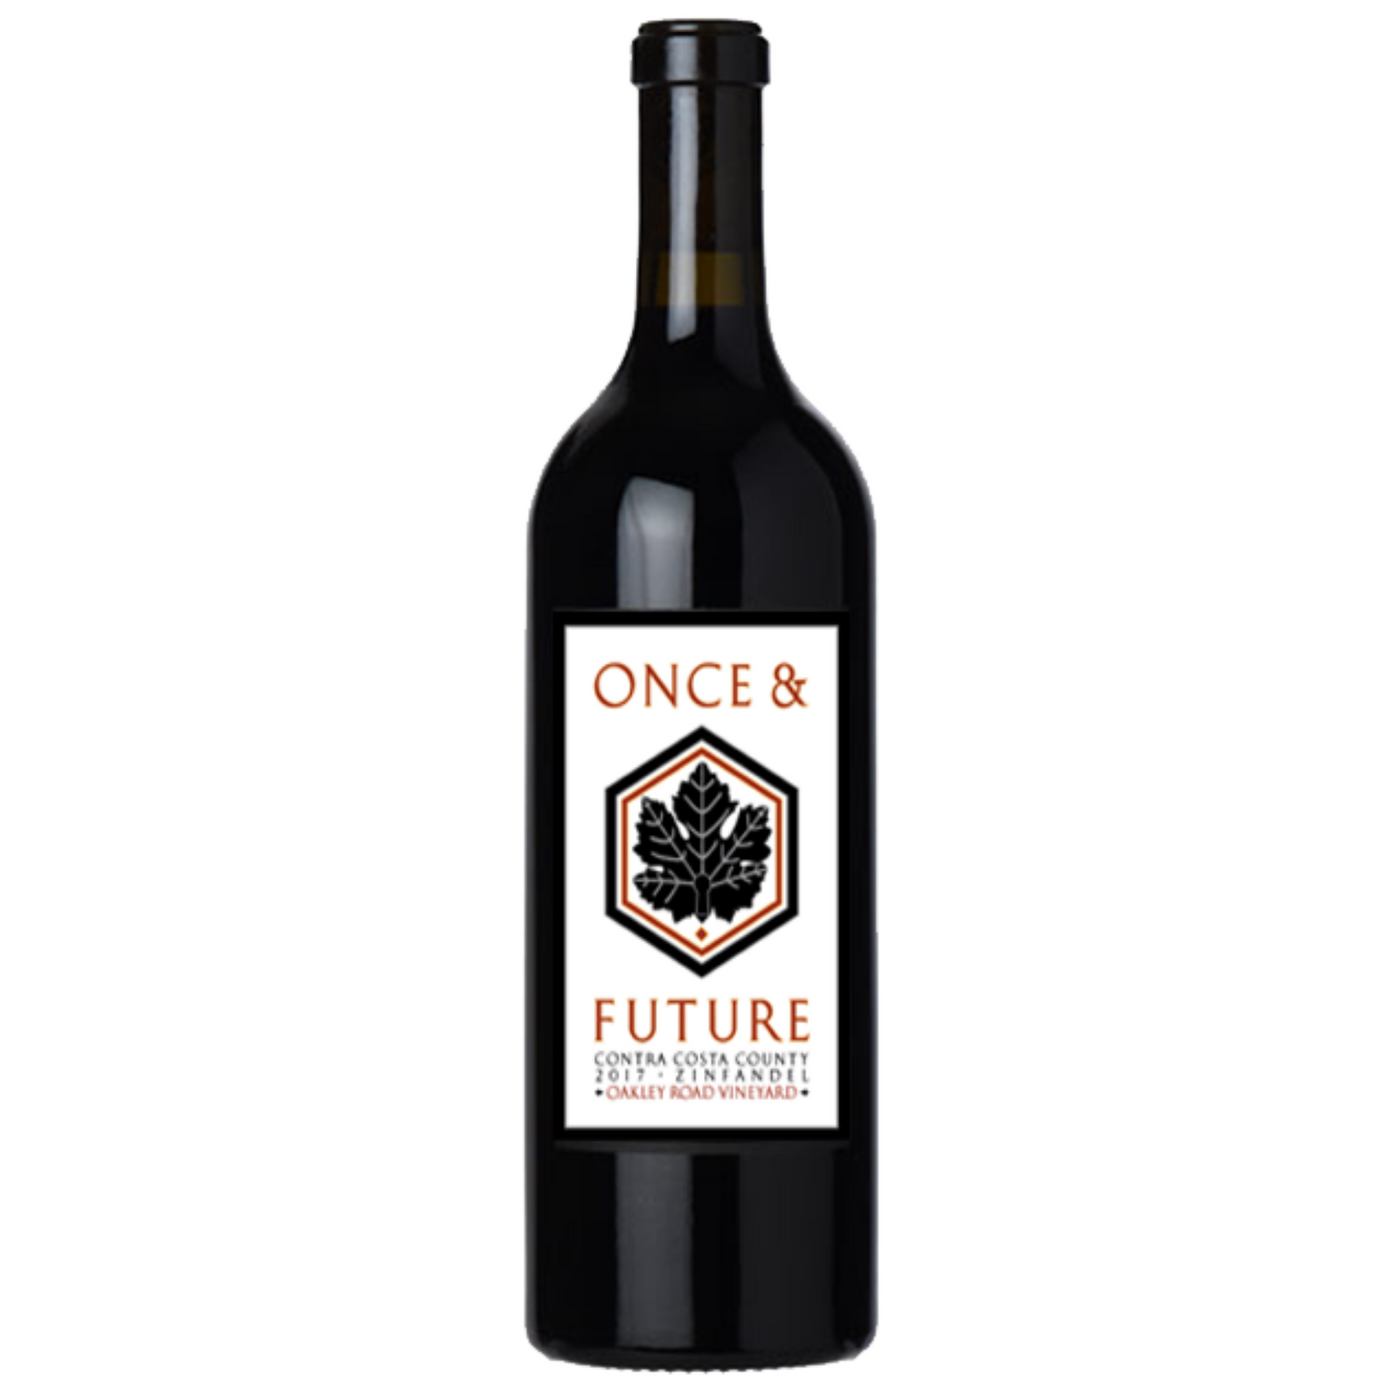 Once and Future Oakley Road Vineyard Zinfandel 2017